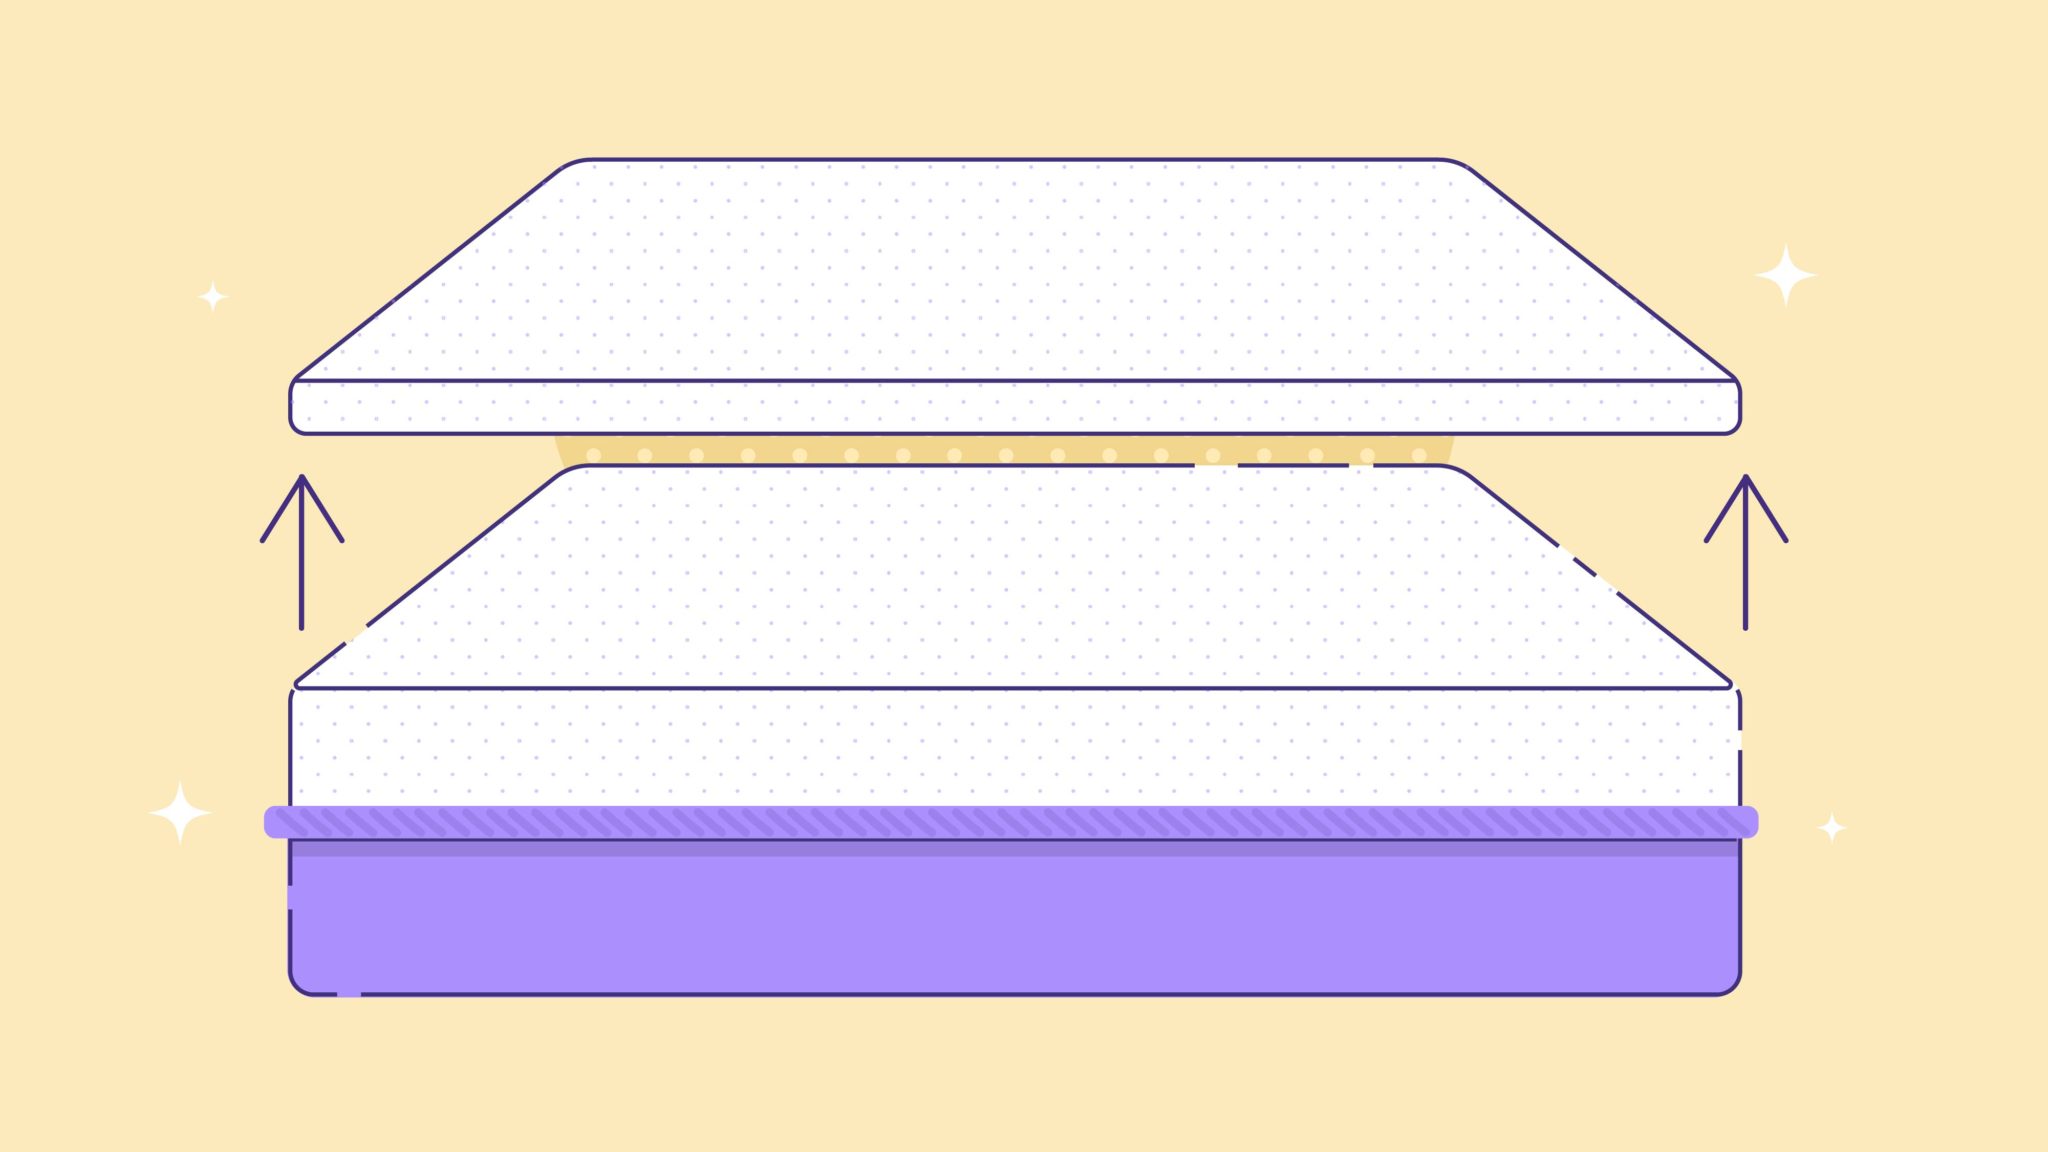 tempurature regulating memory foam mattress topper